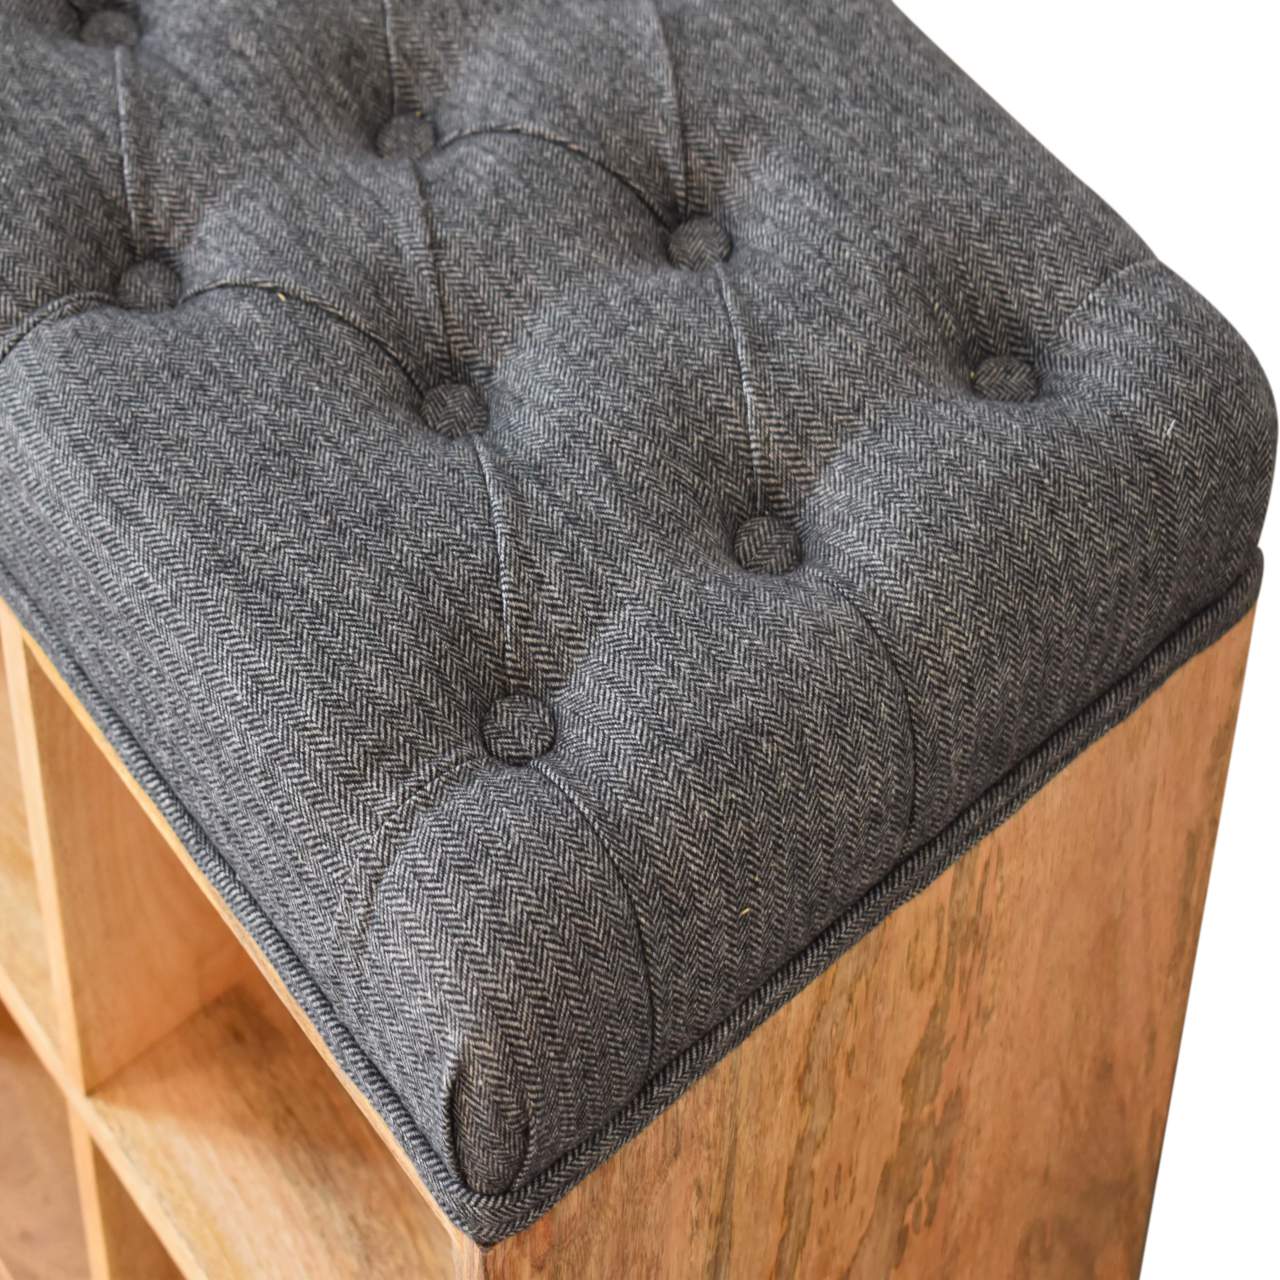 Mini Black Tweed Shoe Storage Bench With Seat In Oak Finish 55cm